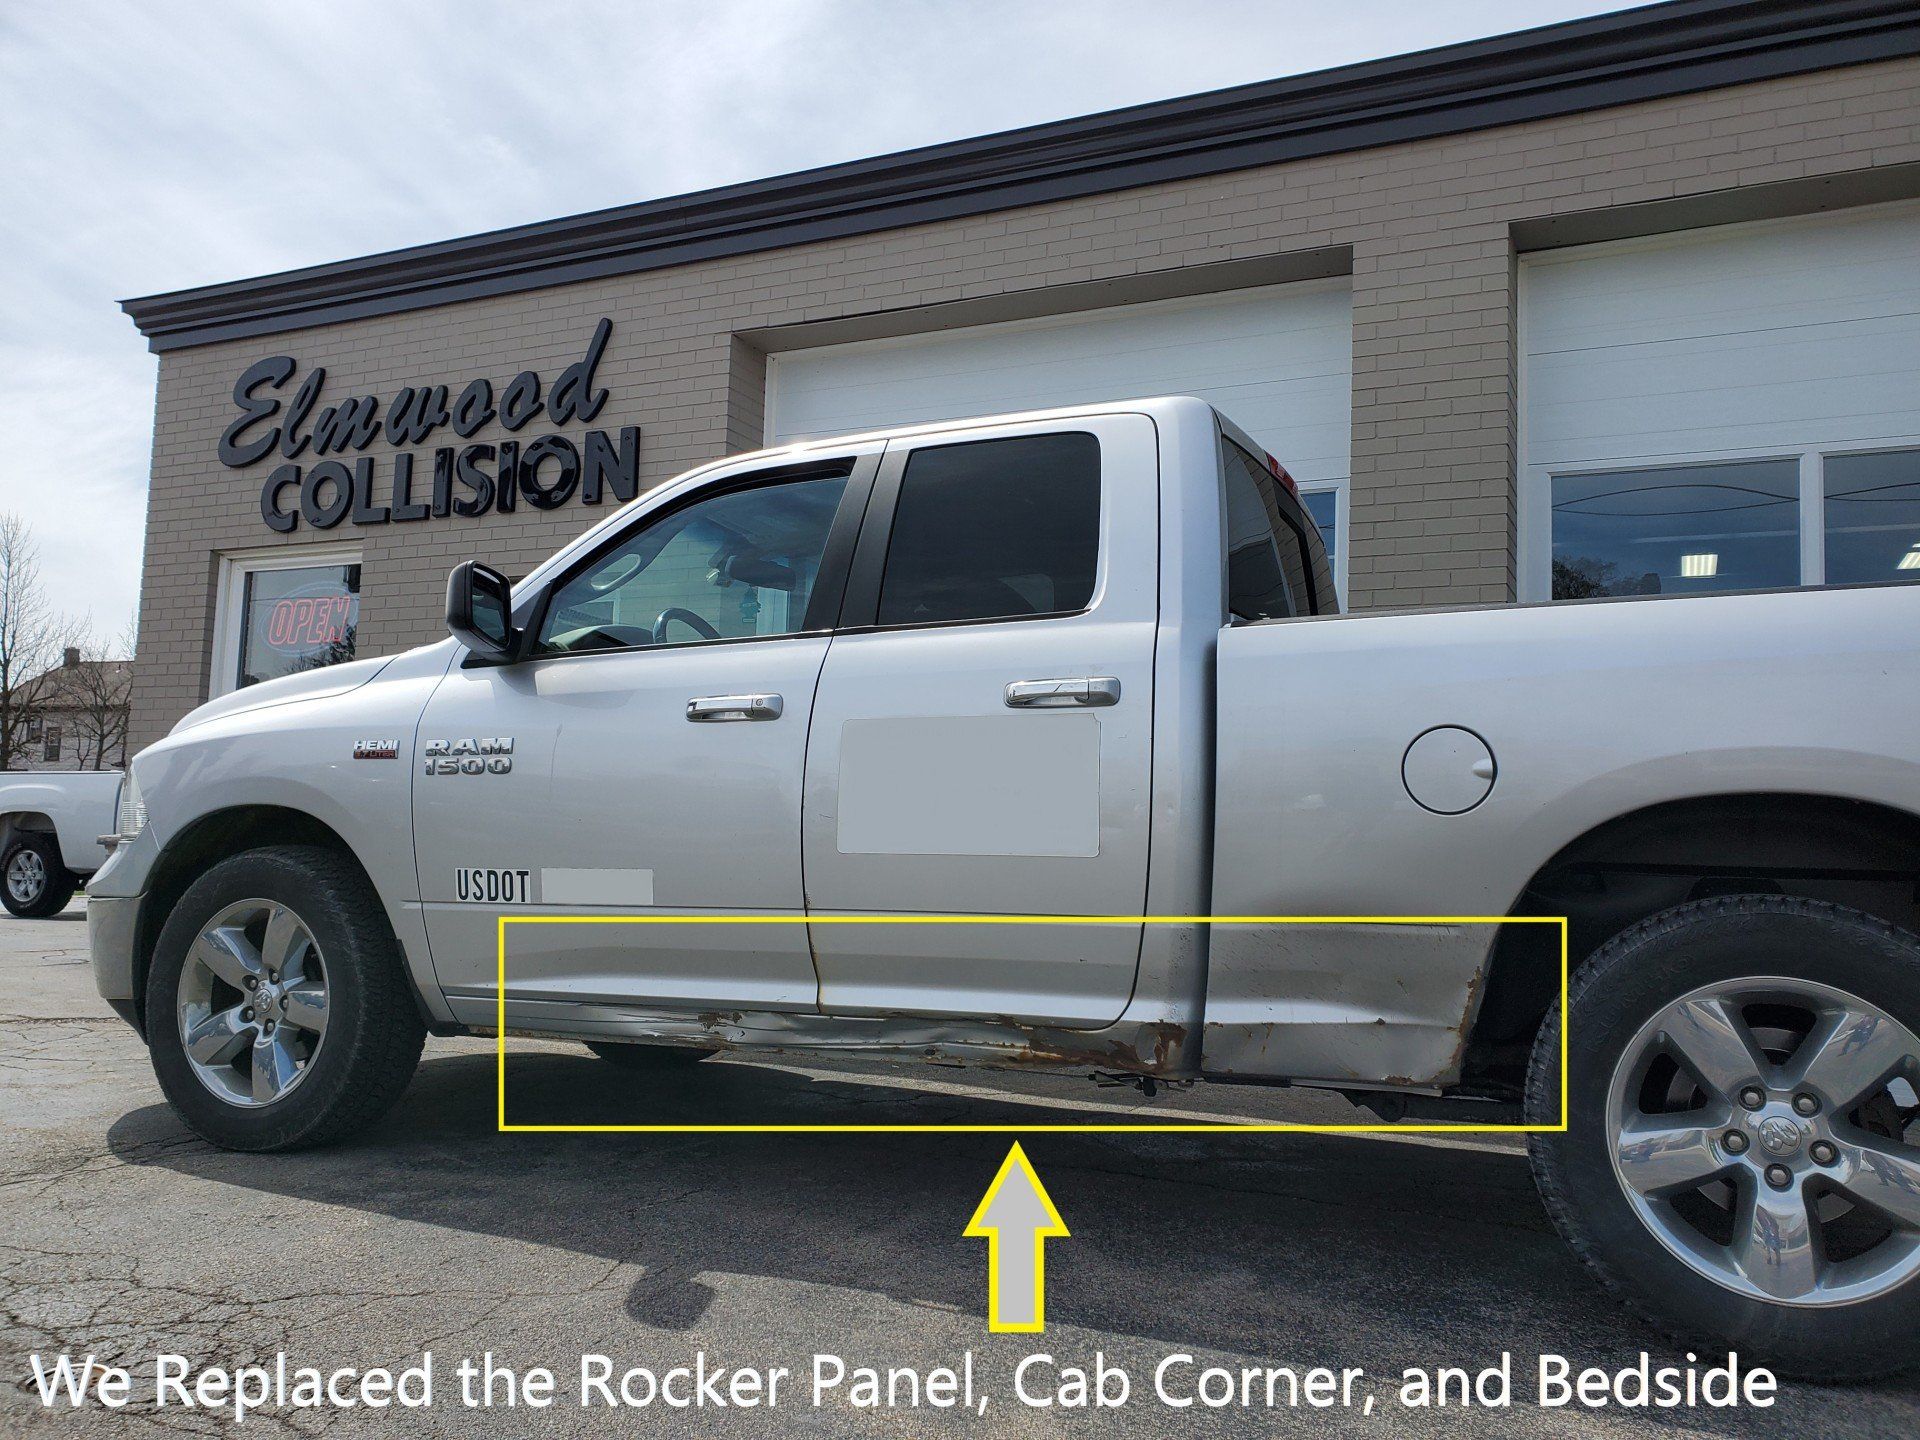 Dodge RAM 1500 with rocker panel and bedside damage at Elmwood Collision at 2700 Elmwood Ave 14217